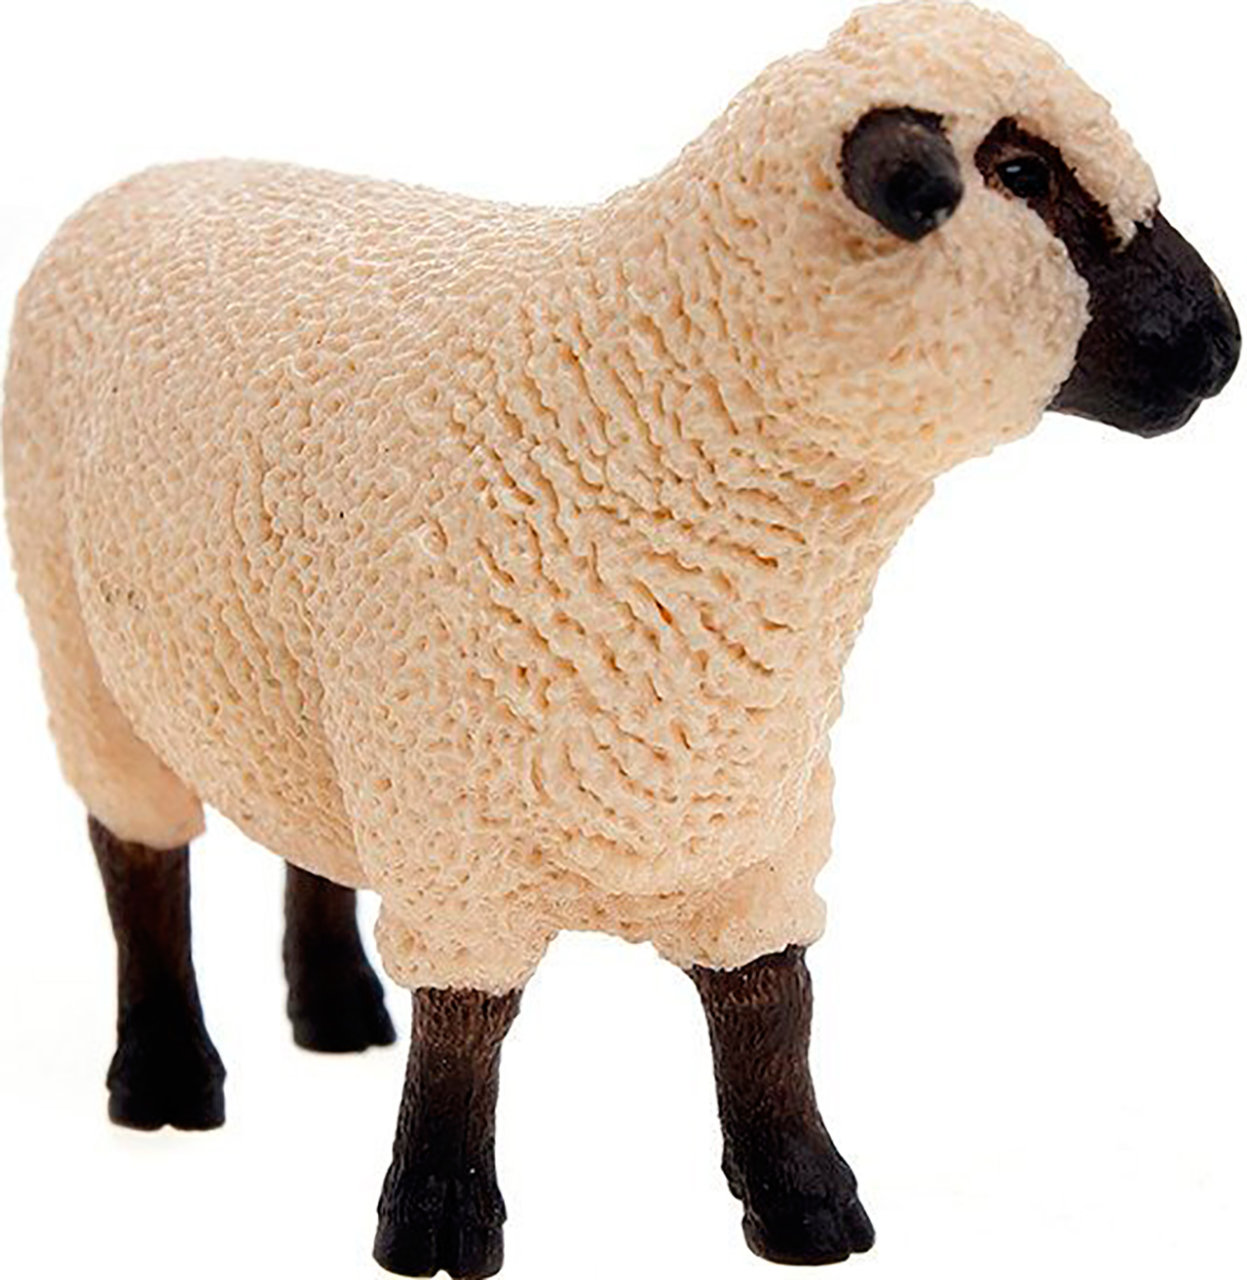 Фигурка - Шробширская овца  